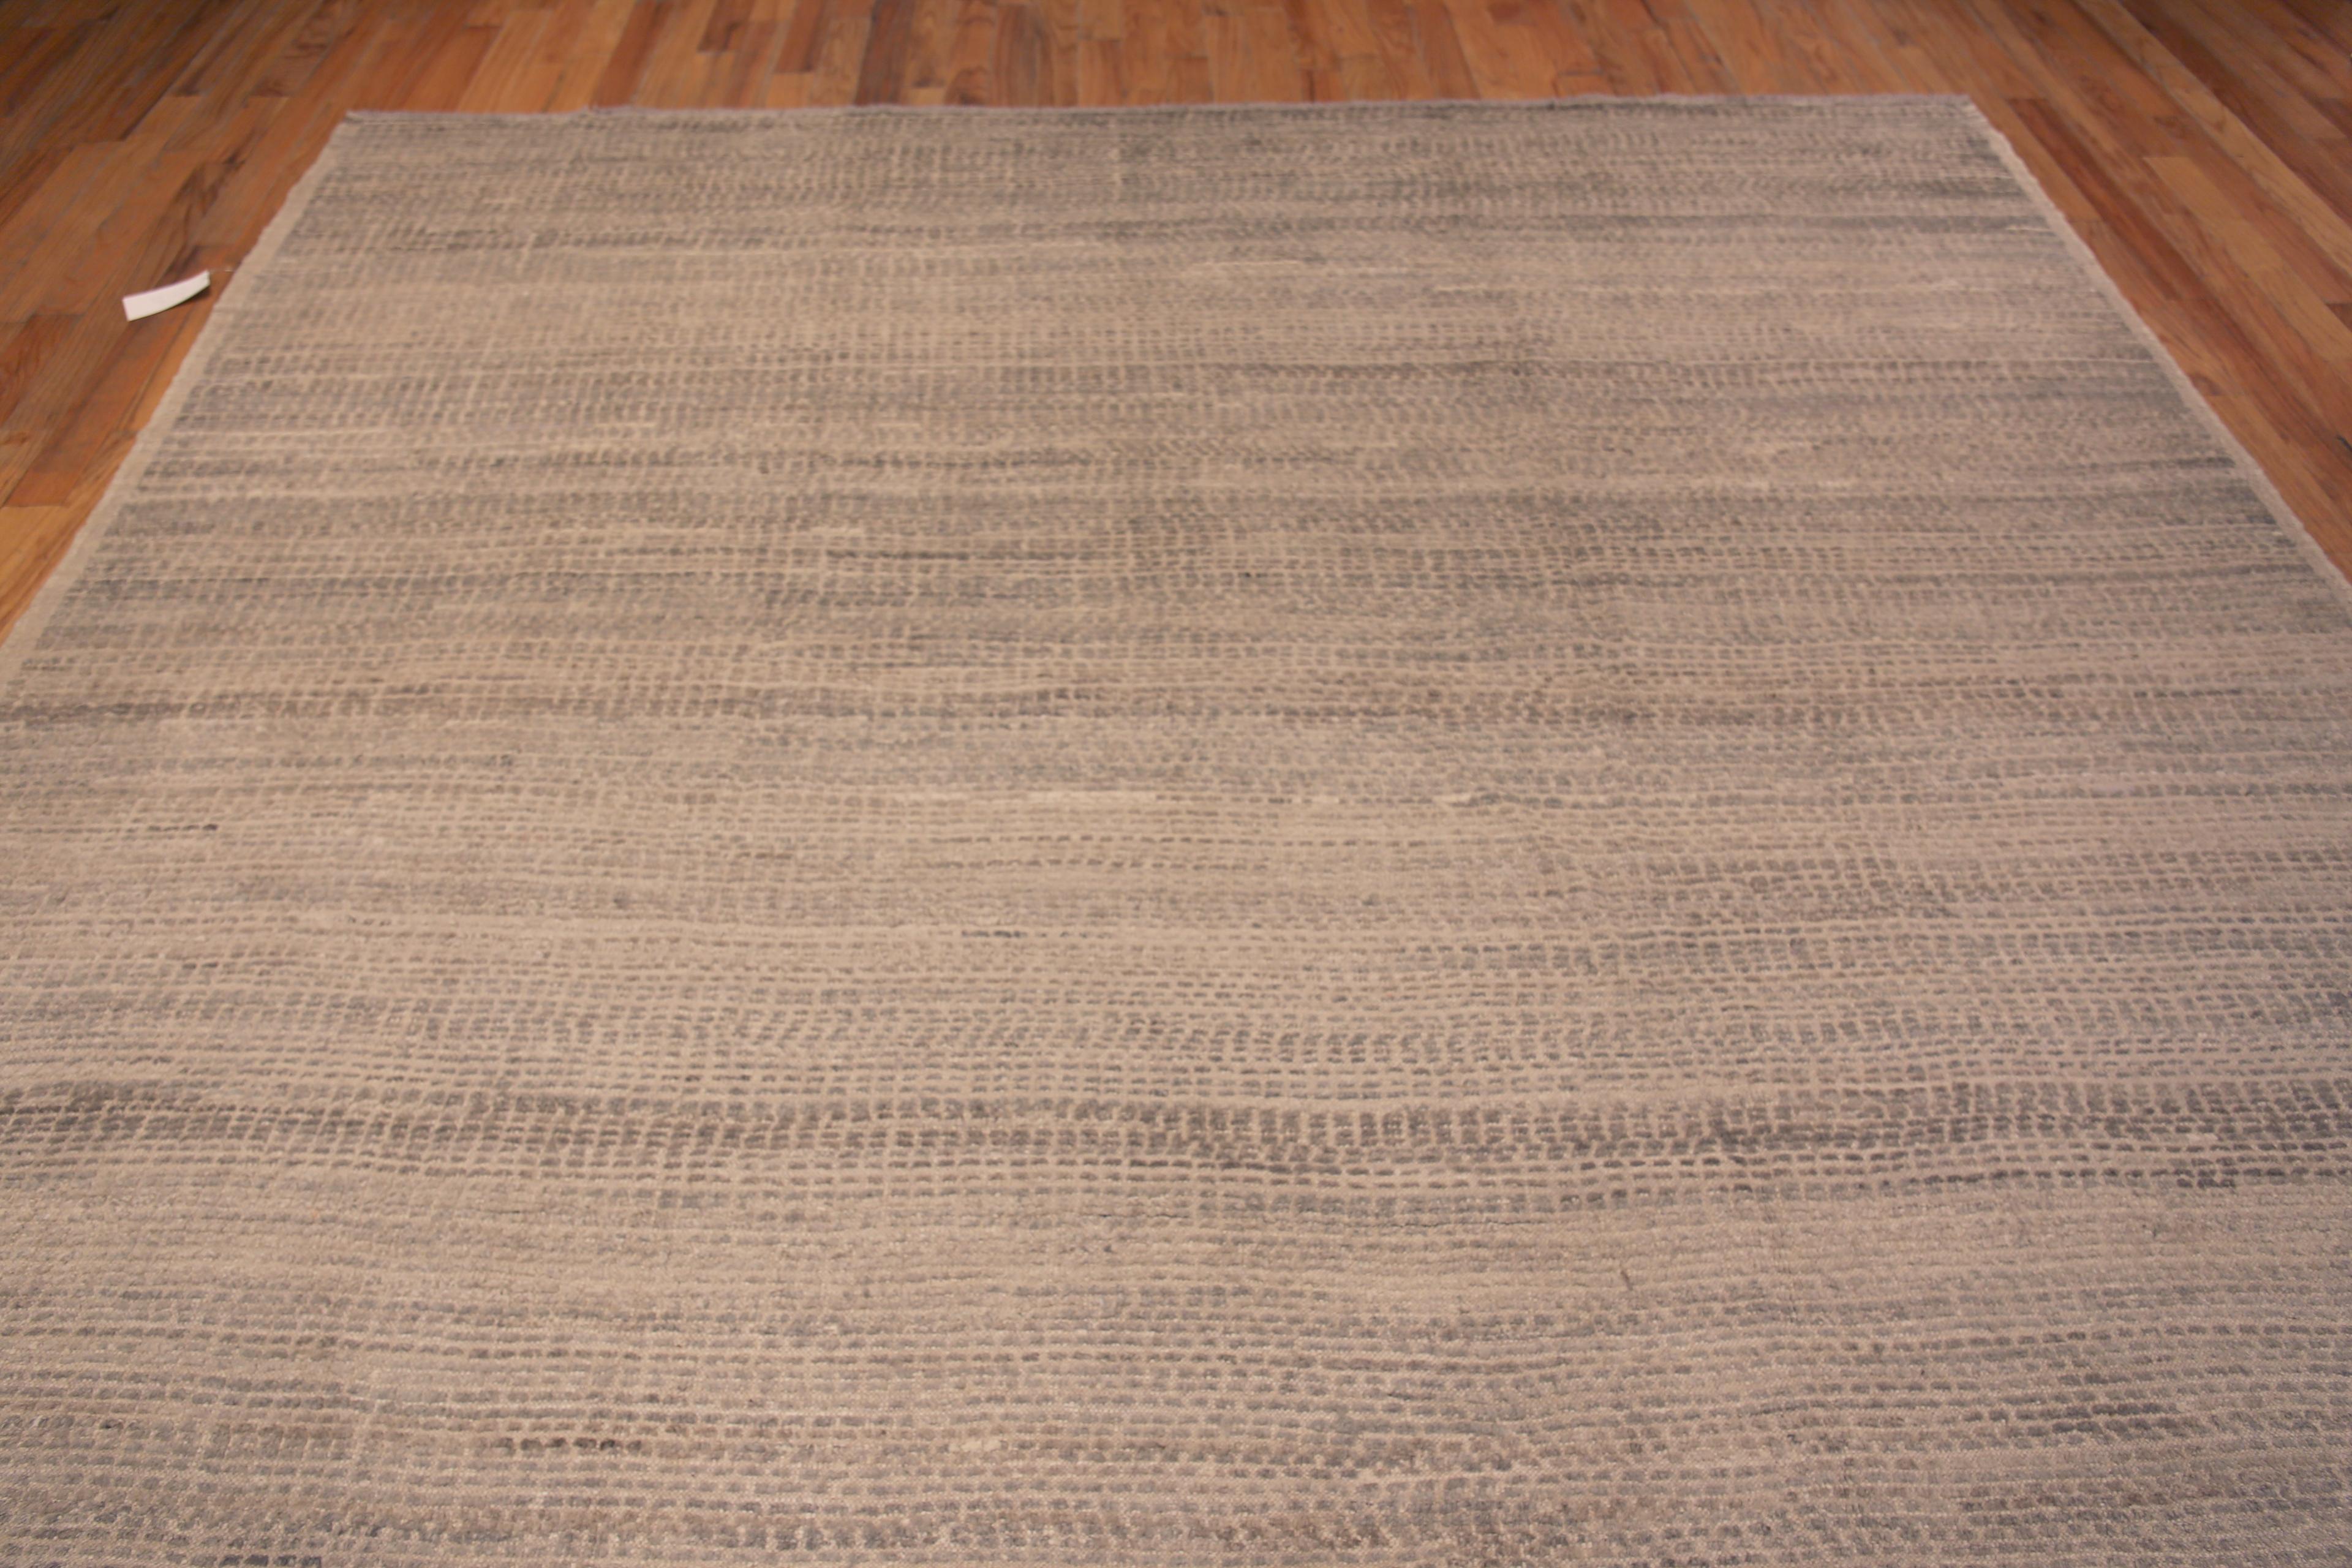 Contemporary Nazmiyal Collection Modern Grey Abstract Handmade Wool Area Rug 10' x 12'9